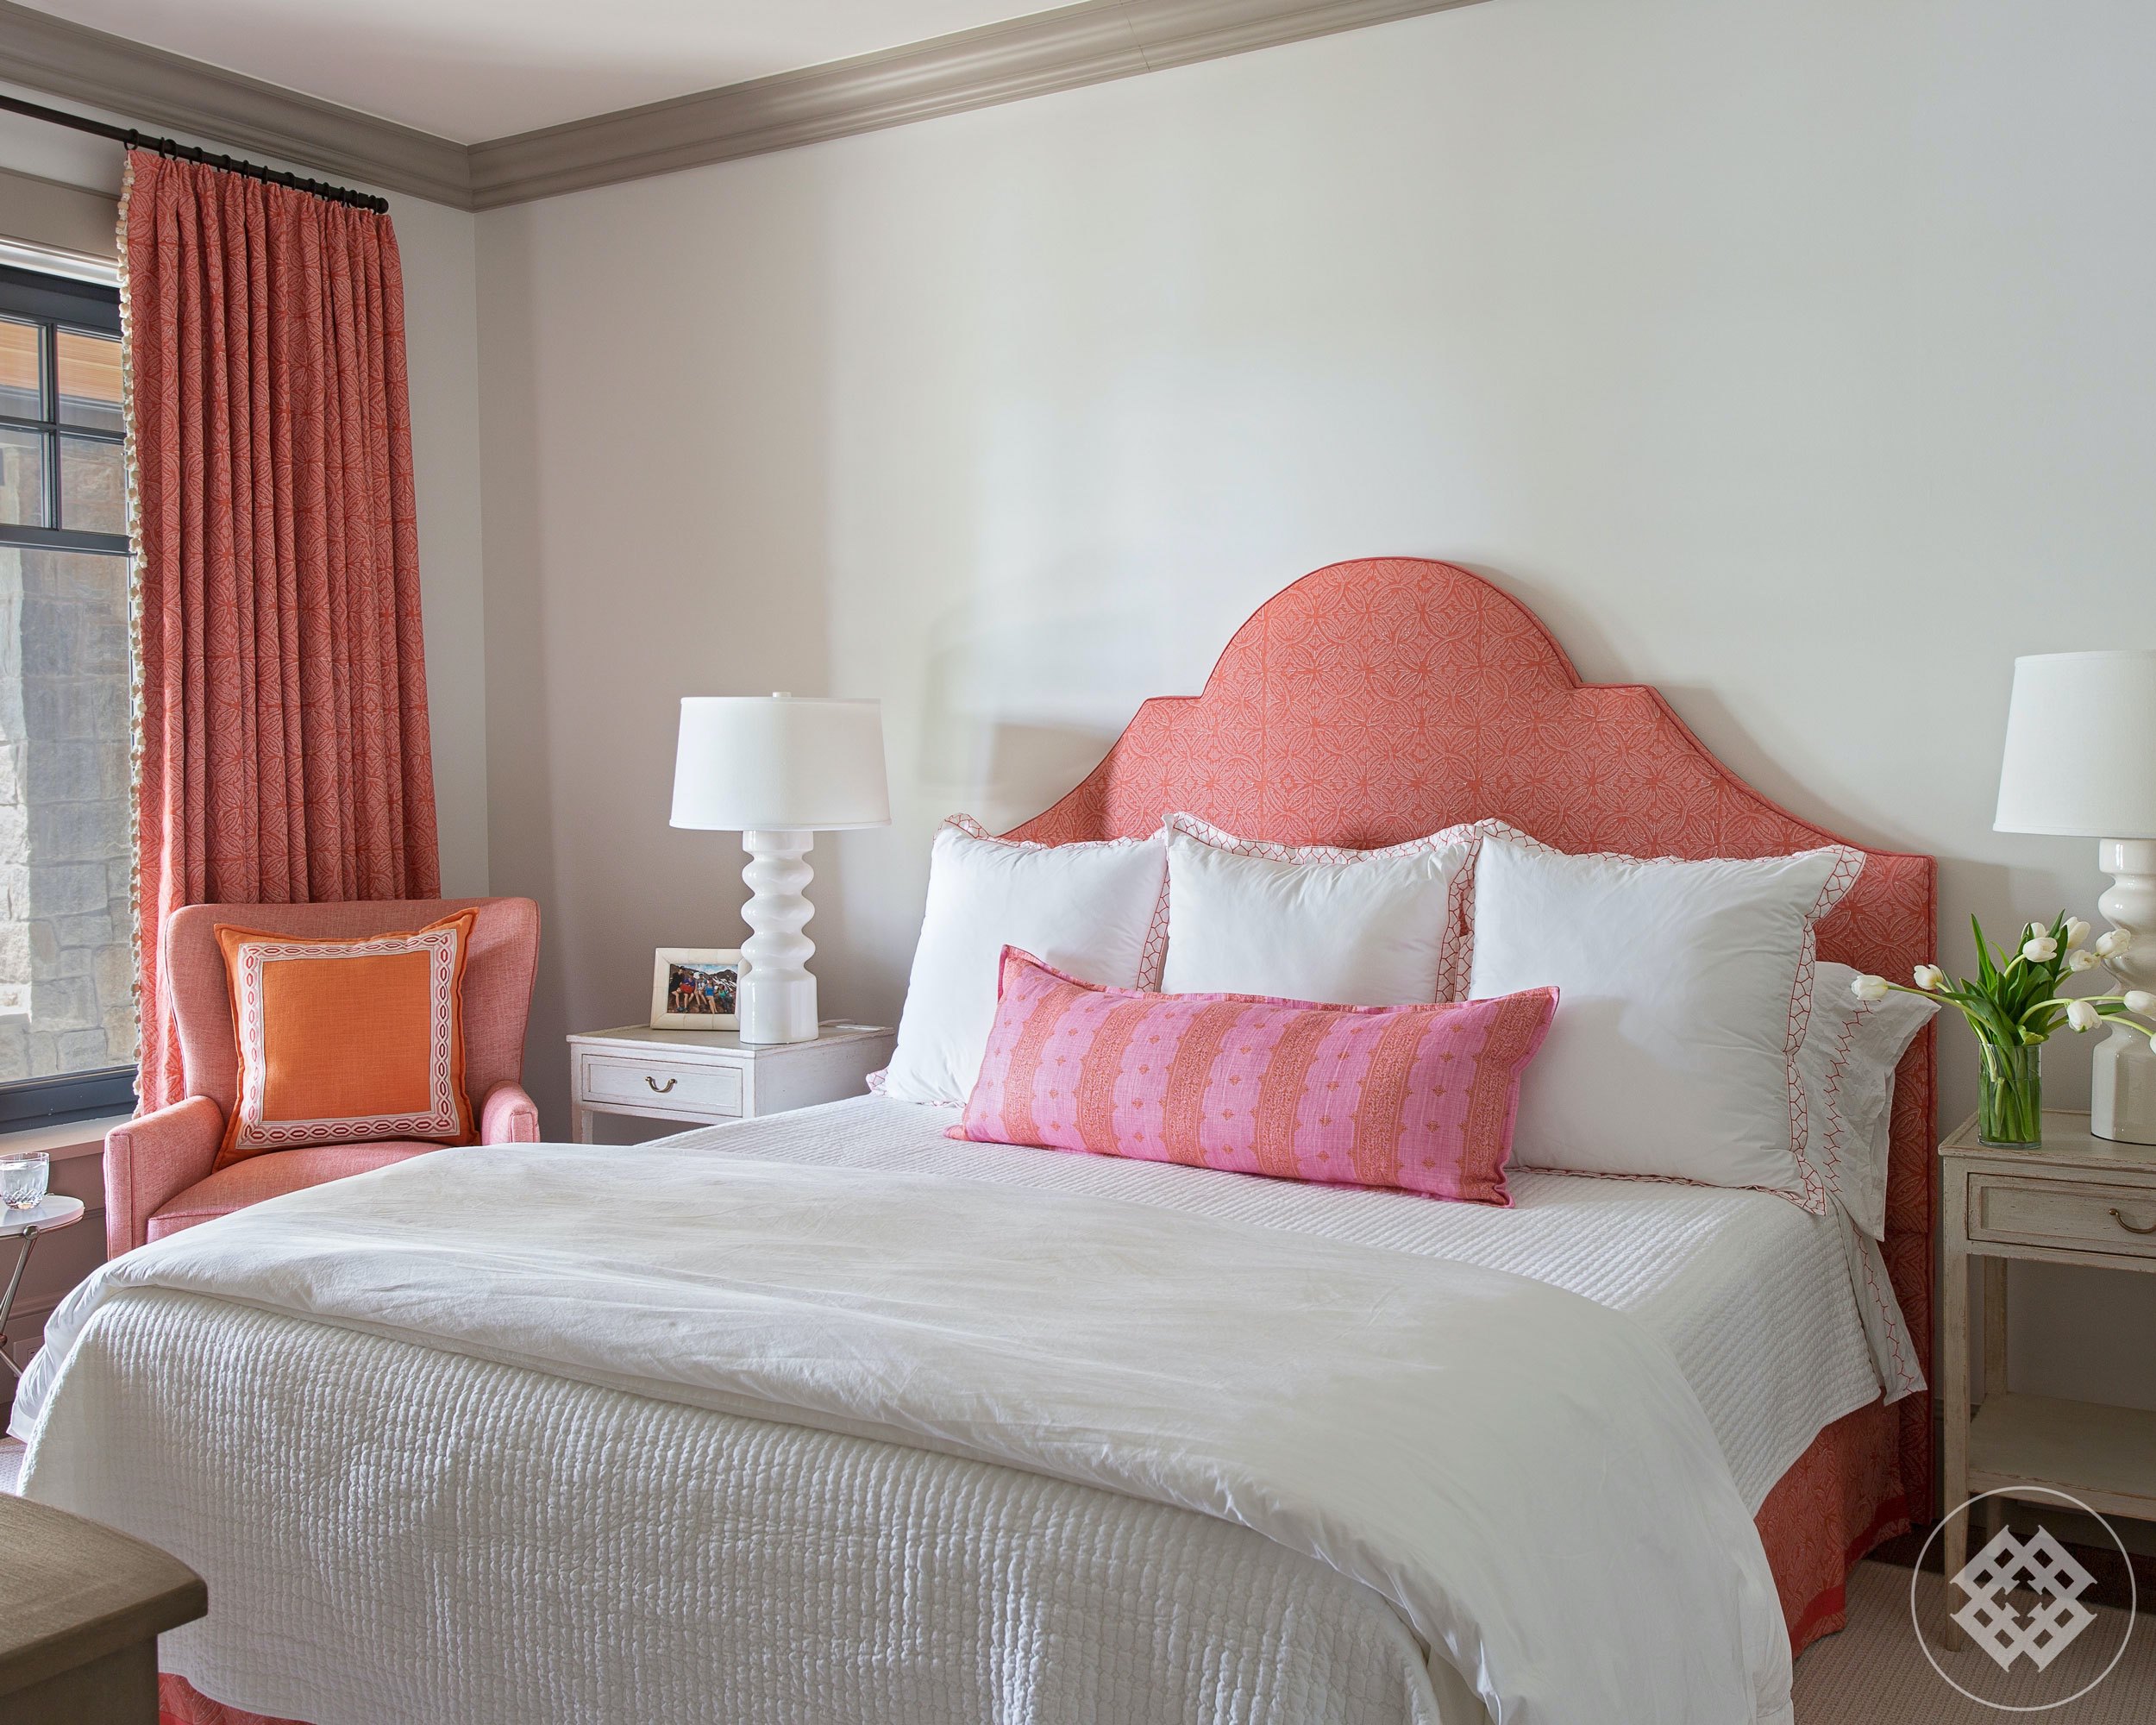 kkl-guest-bedroom-with-custom-upholstered-headboard.jpg